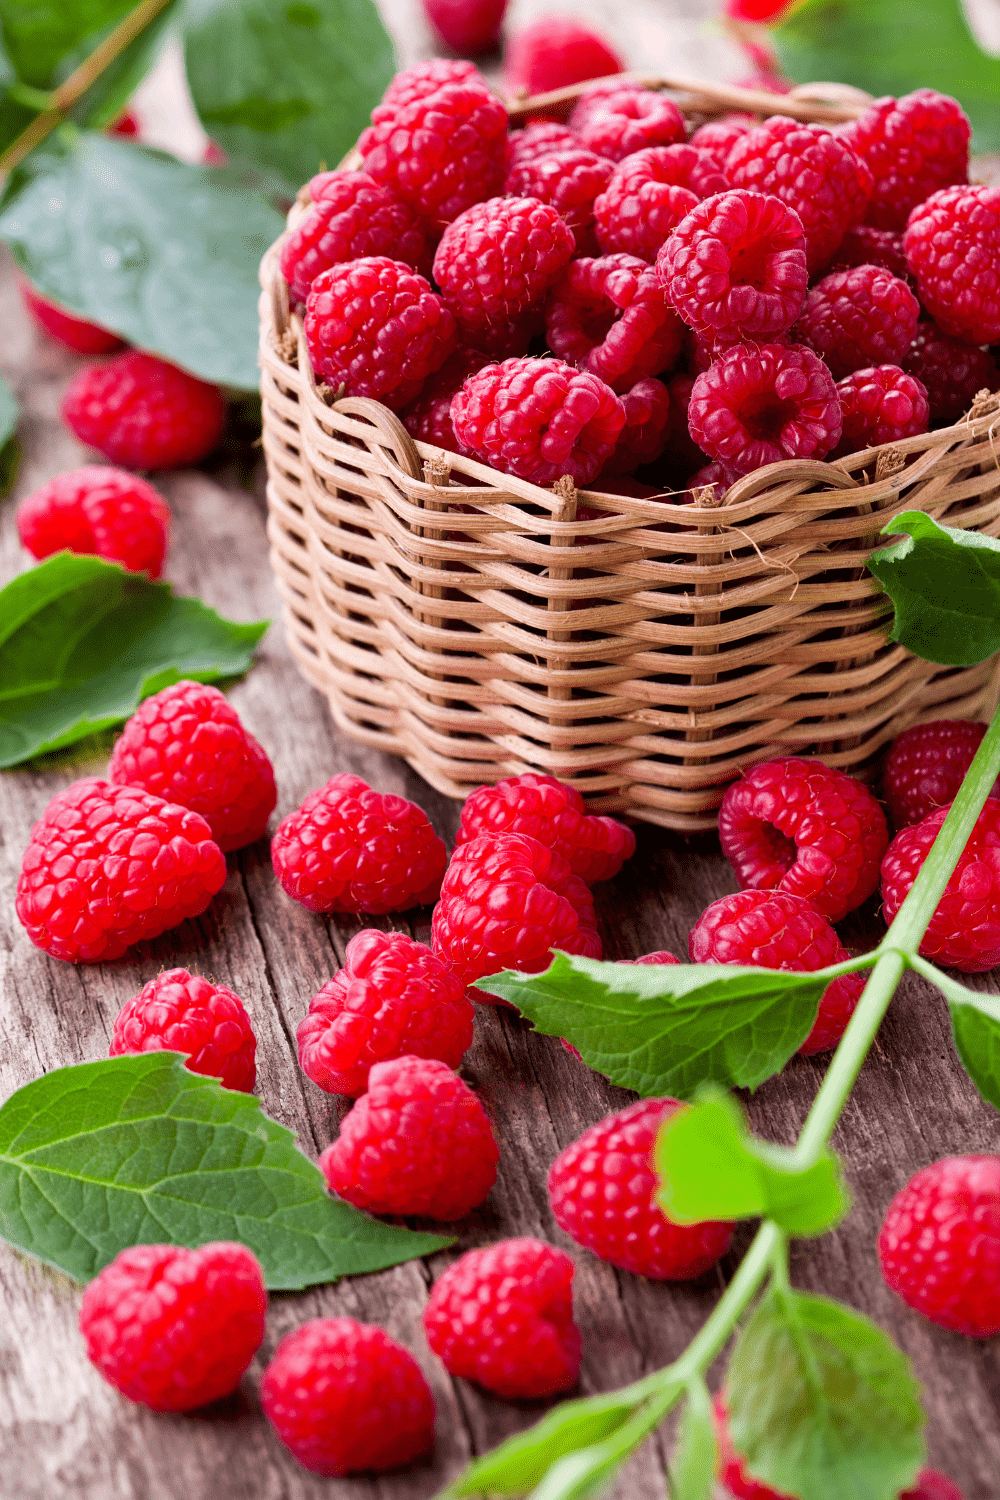 Raspberries in wicker basket with stems in background